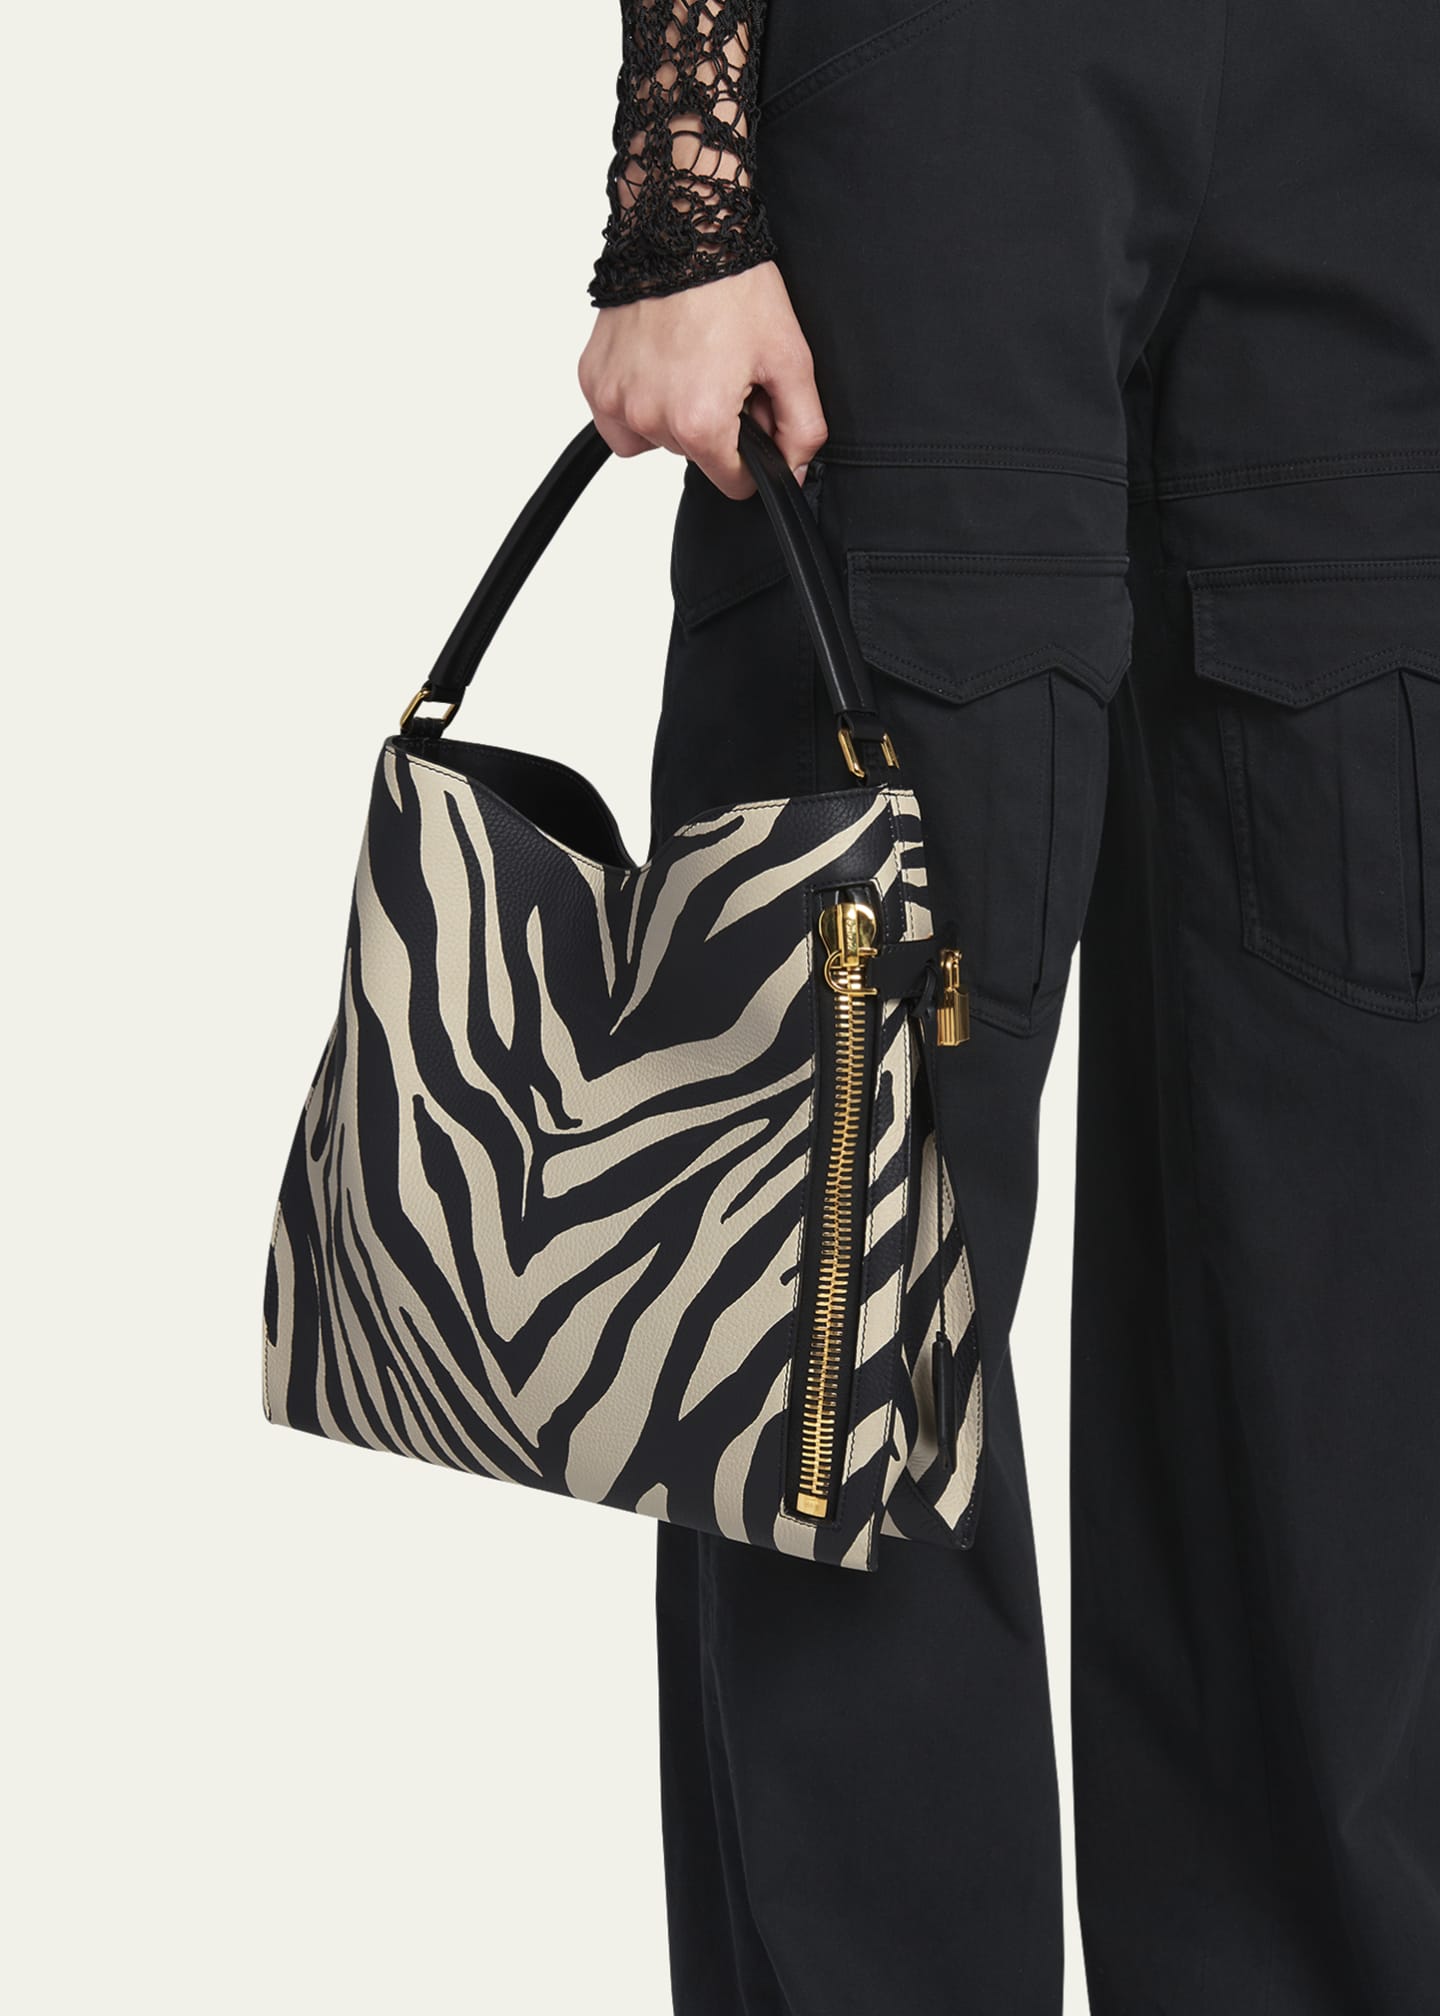 TOM FORD Alix Small Zebra-Print Leather Hobo Bag - Bergdorf Goodman